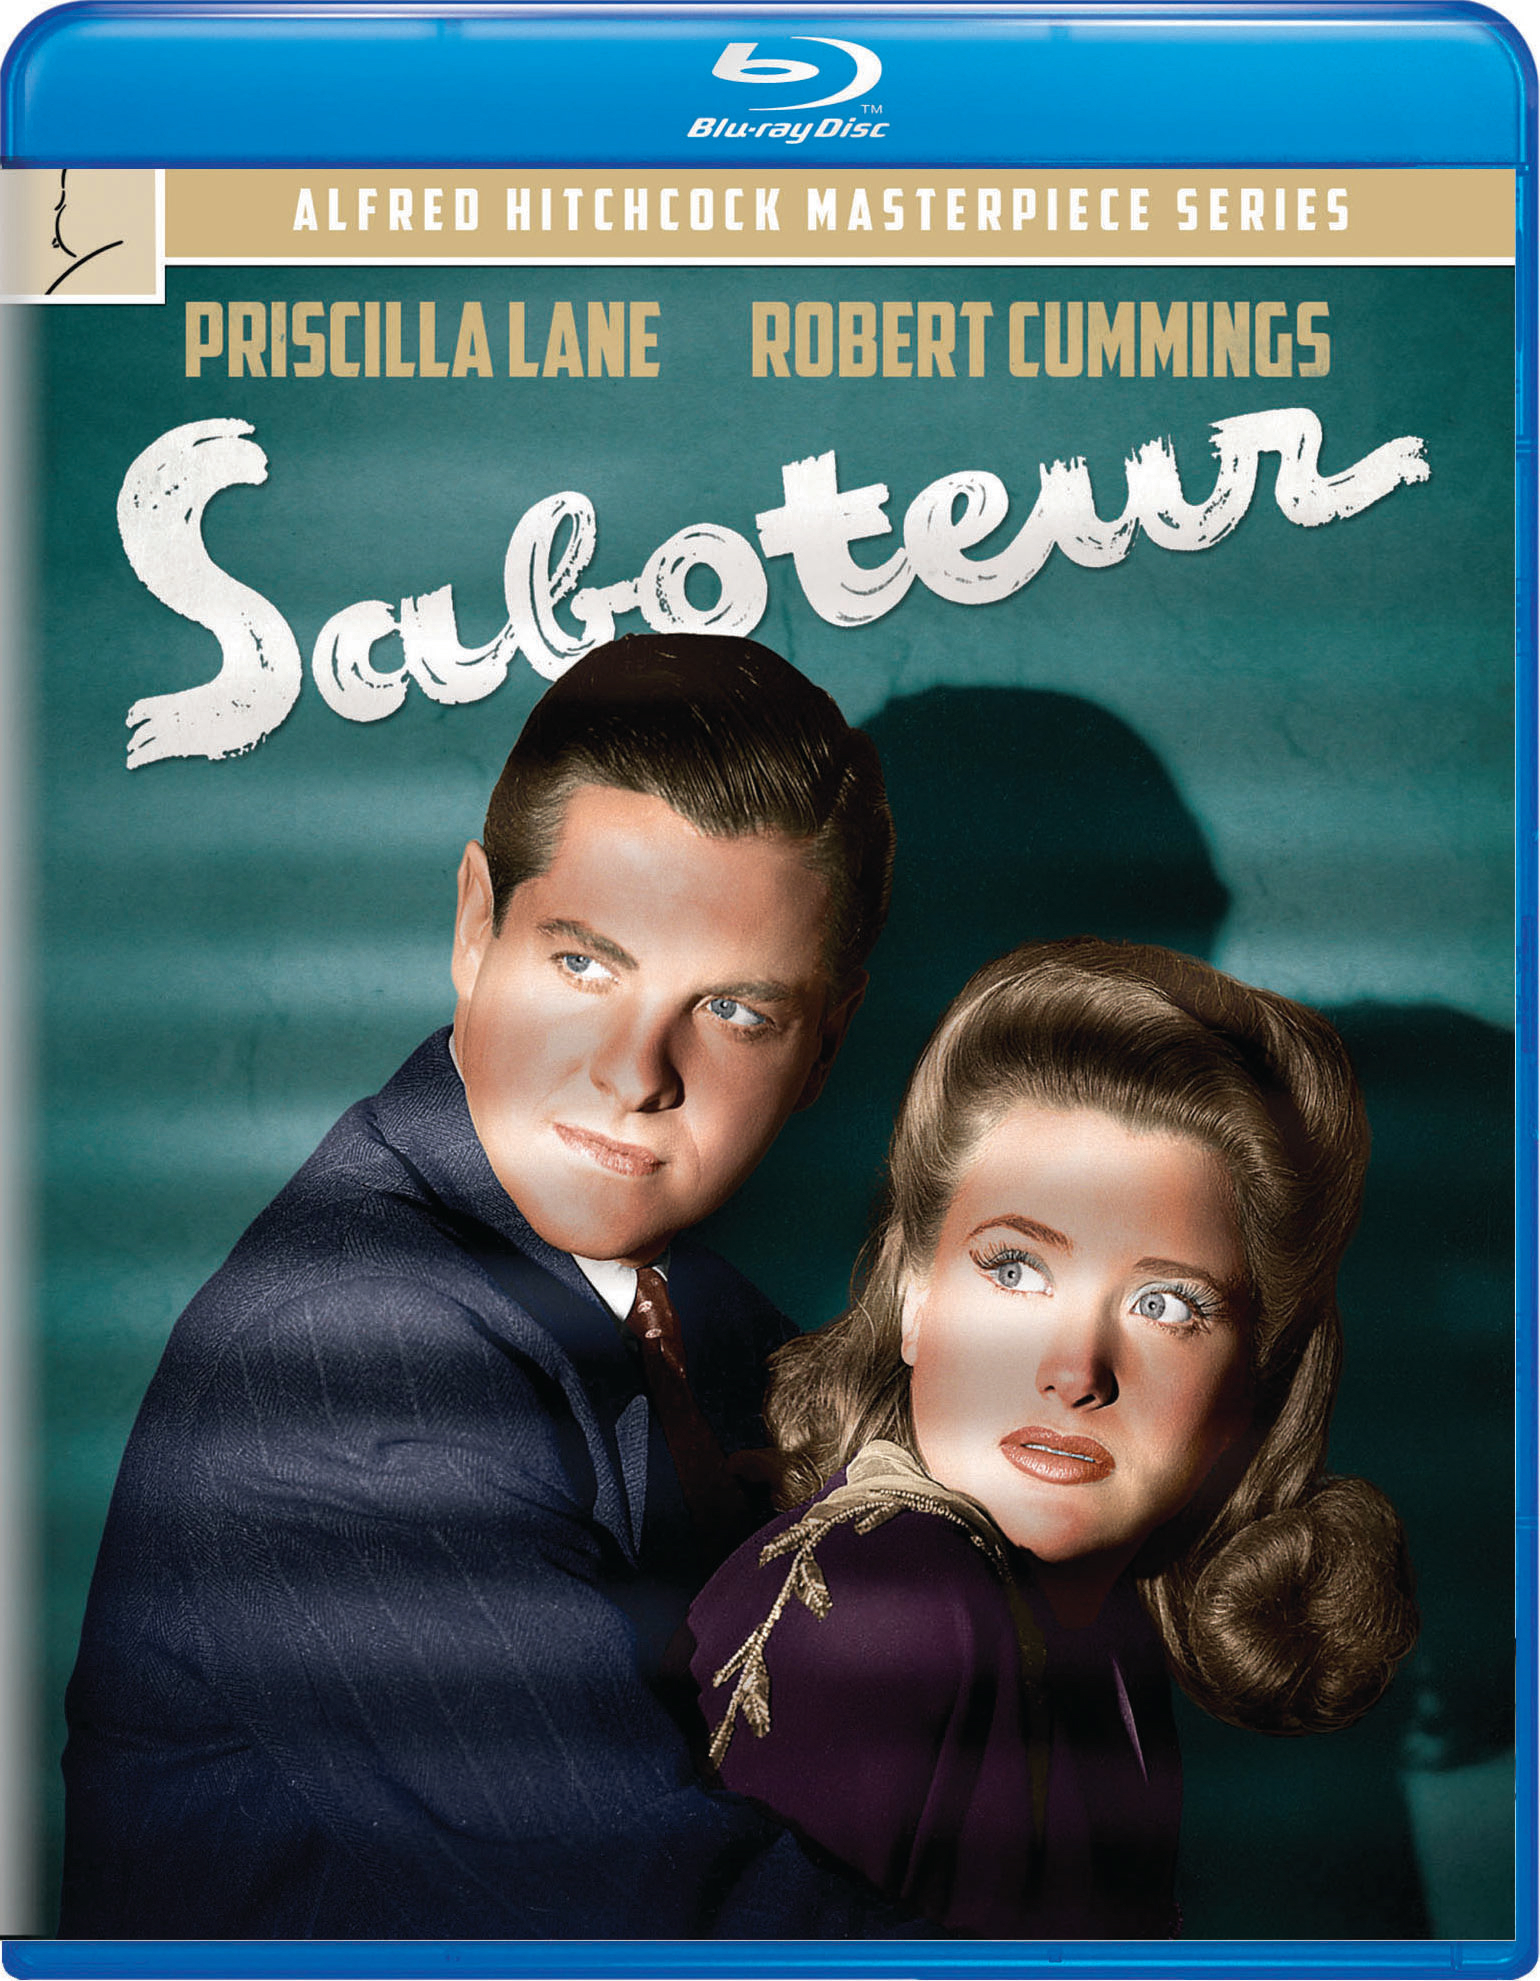 Saboteur - Blu-ray [ 1942 ]  - Classic Movies On Blu-ray - Movies On GRUV